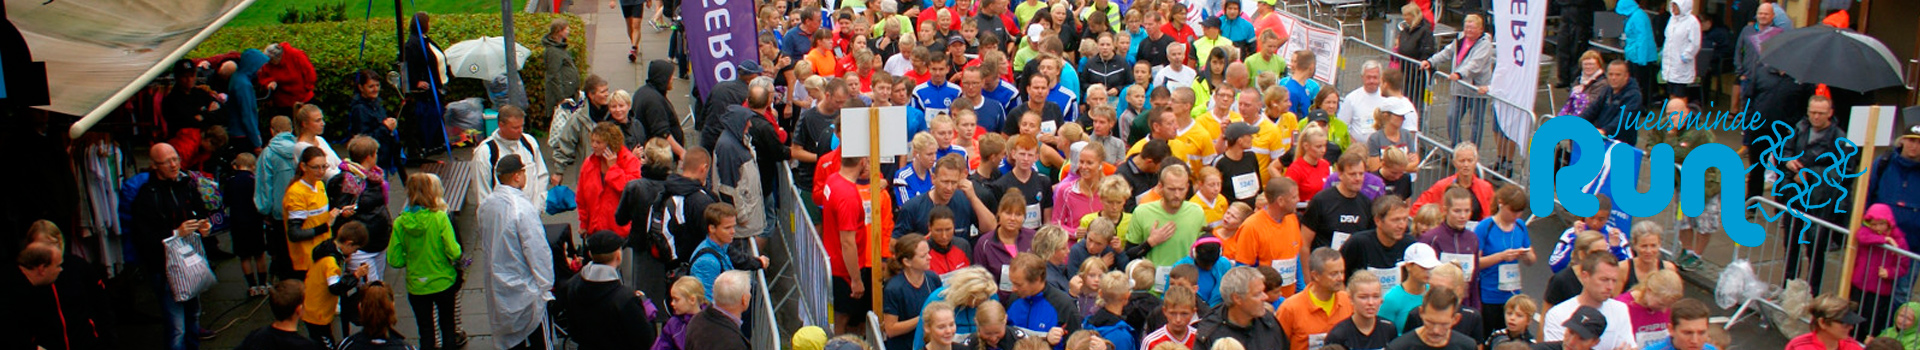 Juelsminde Run 2016